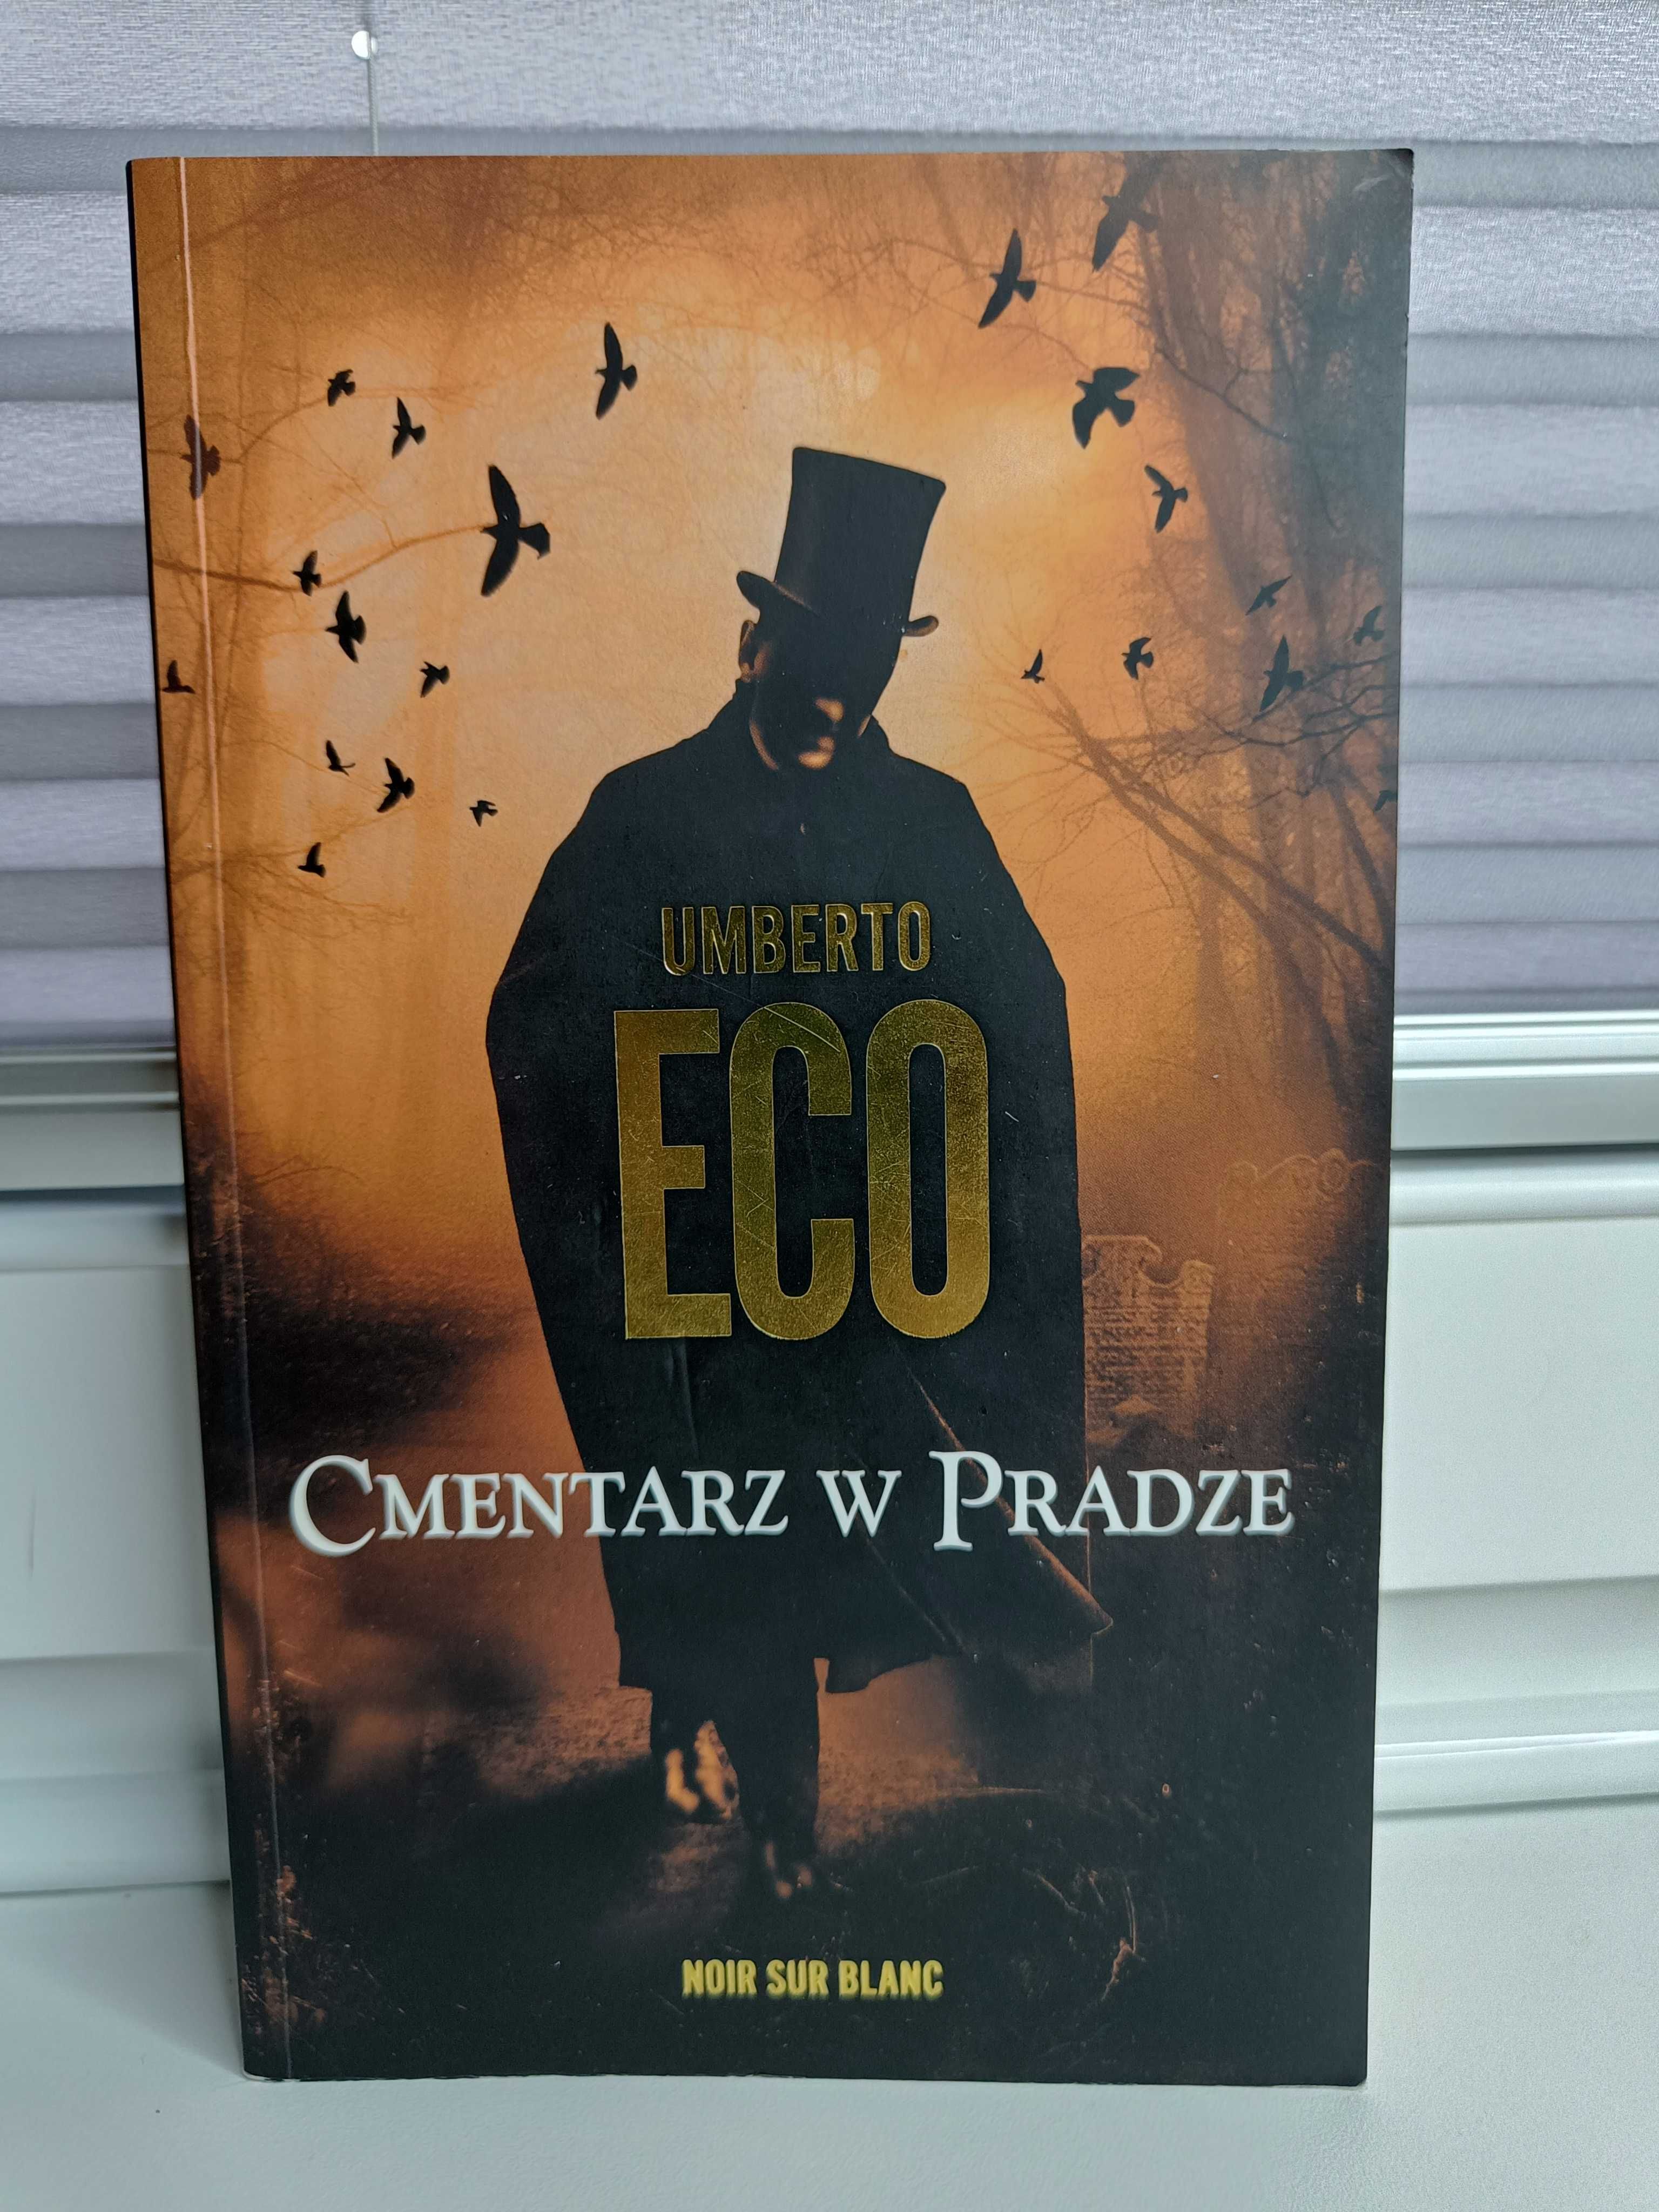 Umberto Eco "Cmentarz w Pradze"